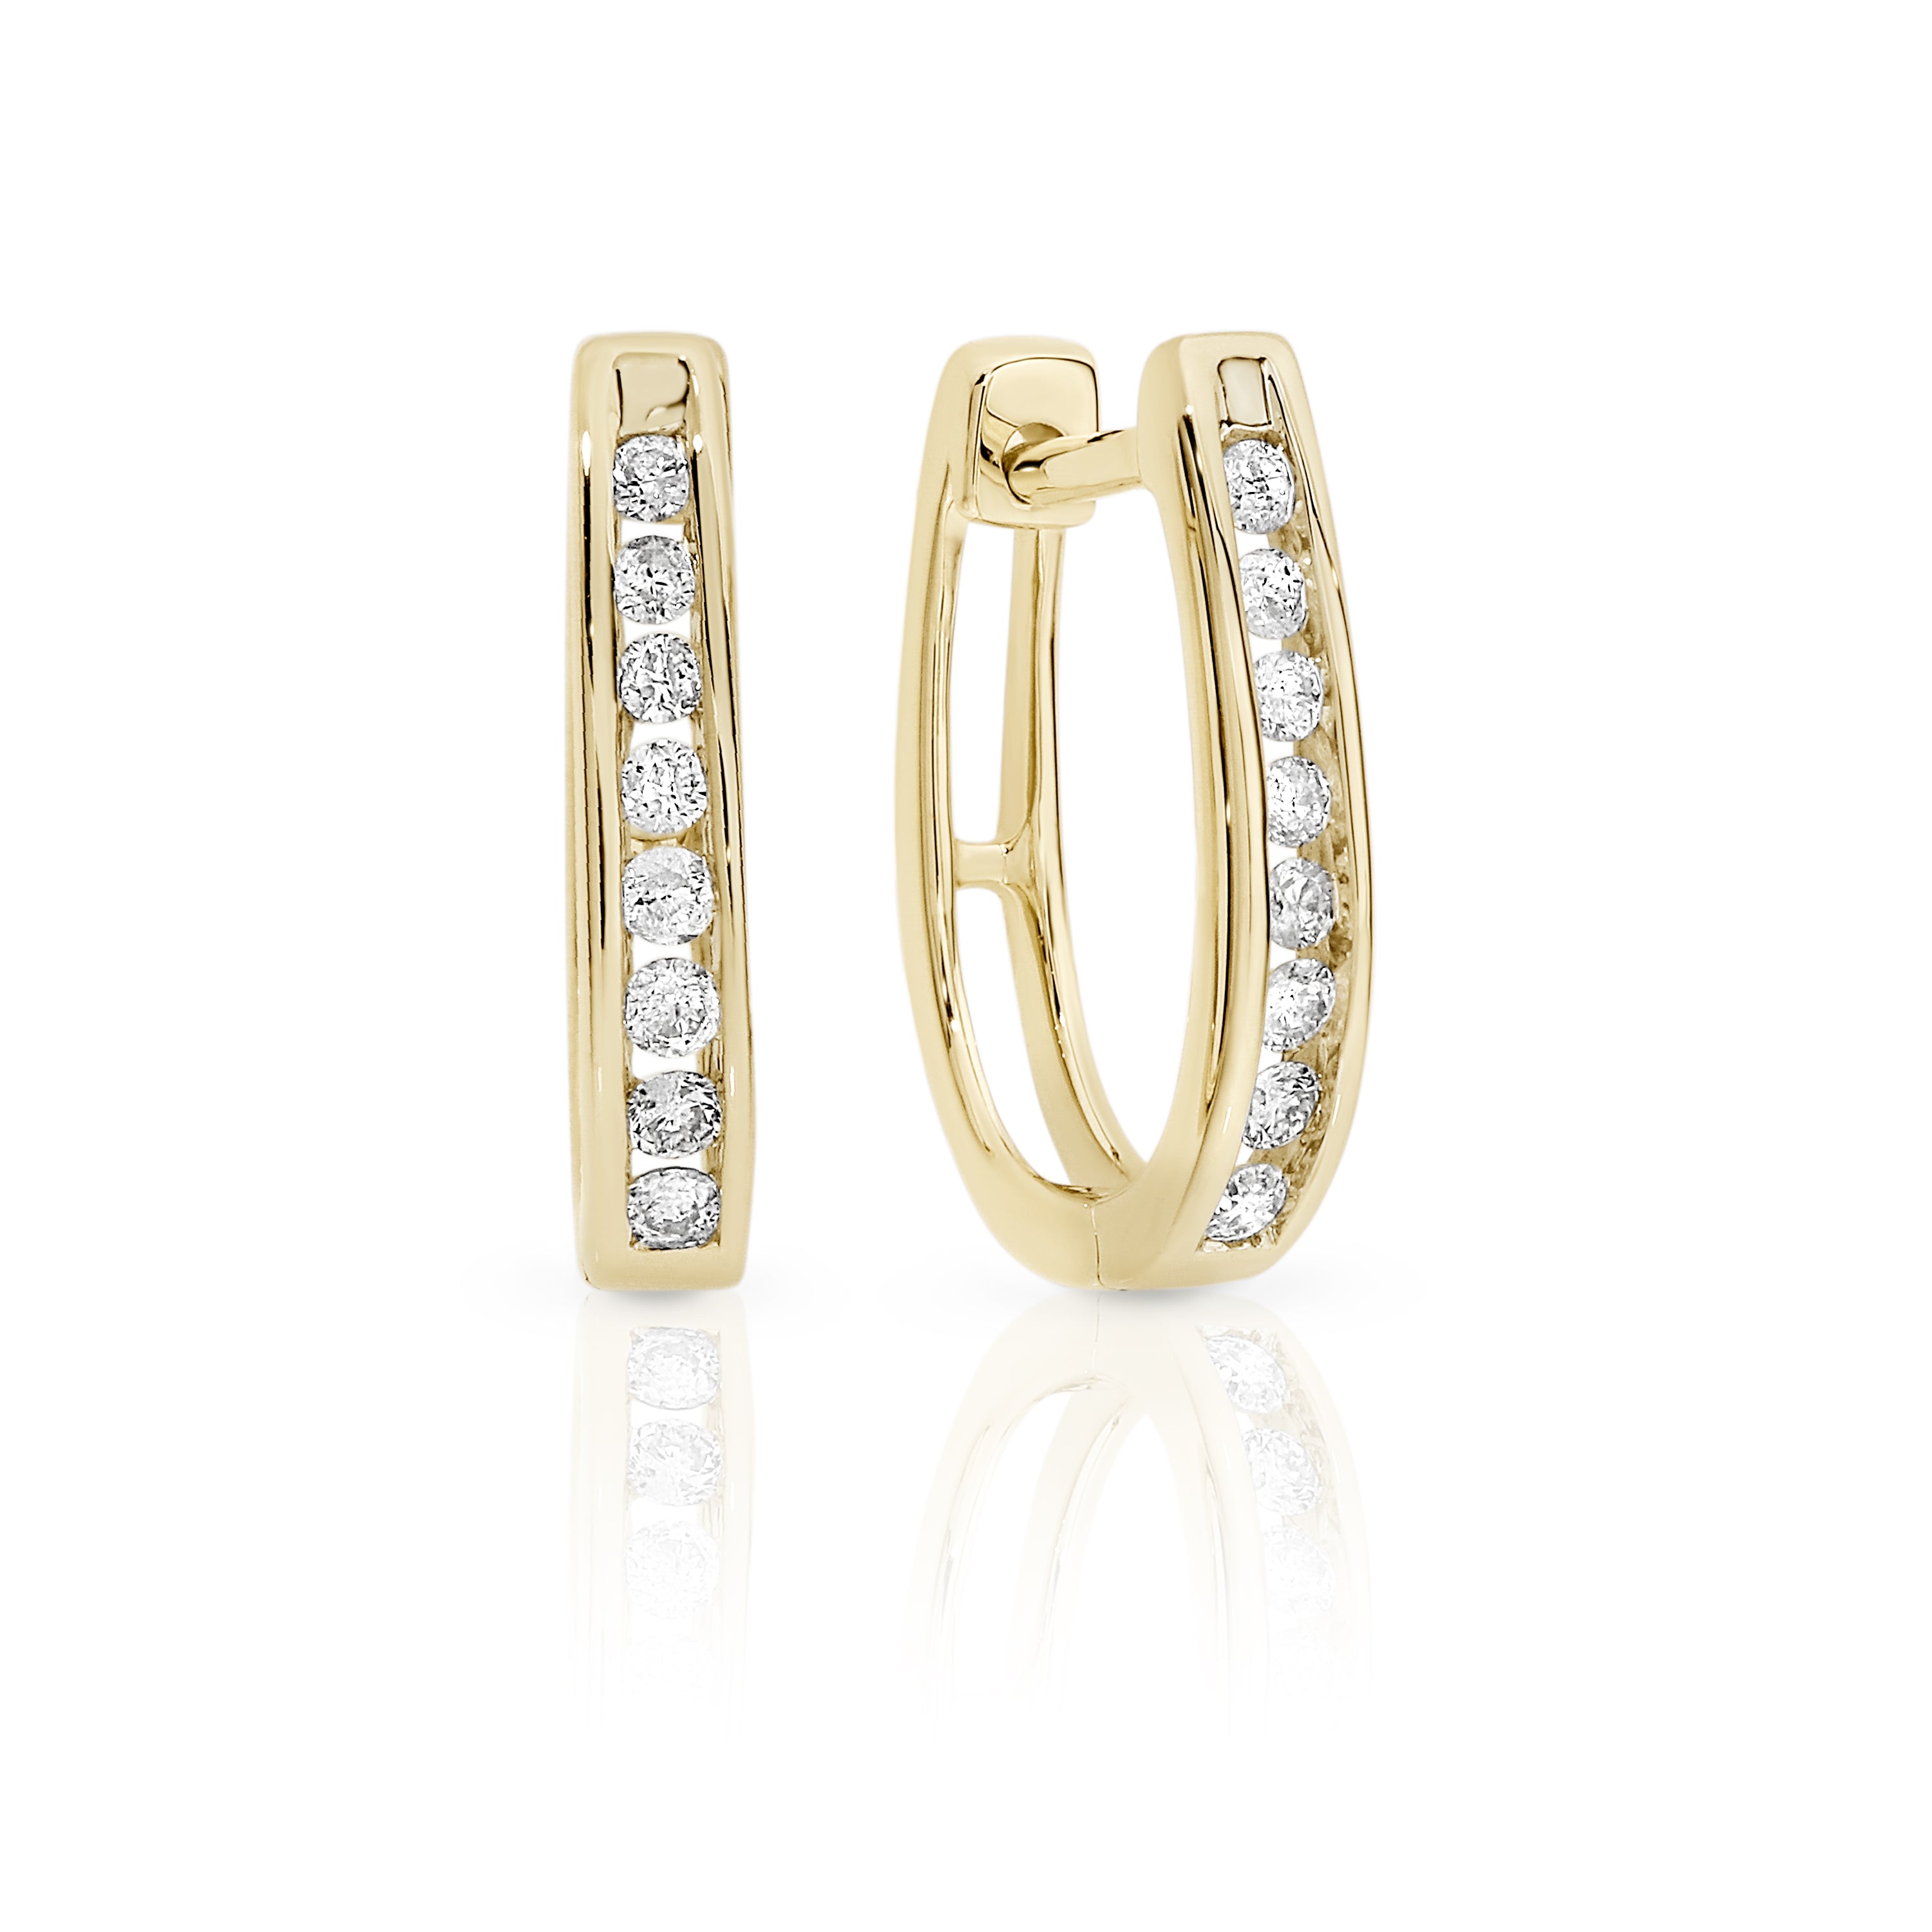 9ct gold 1/4ct diamond earrings